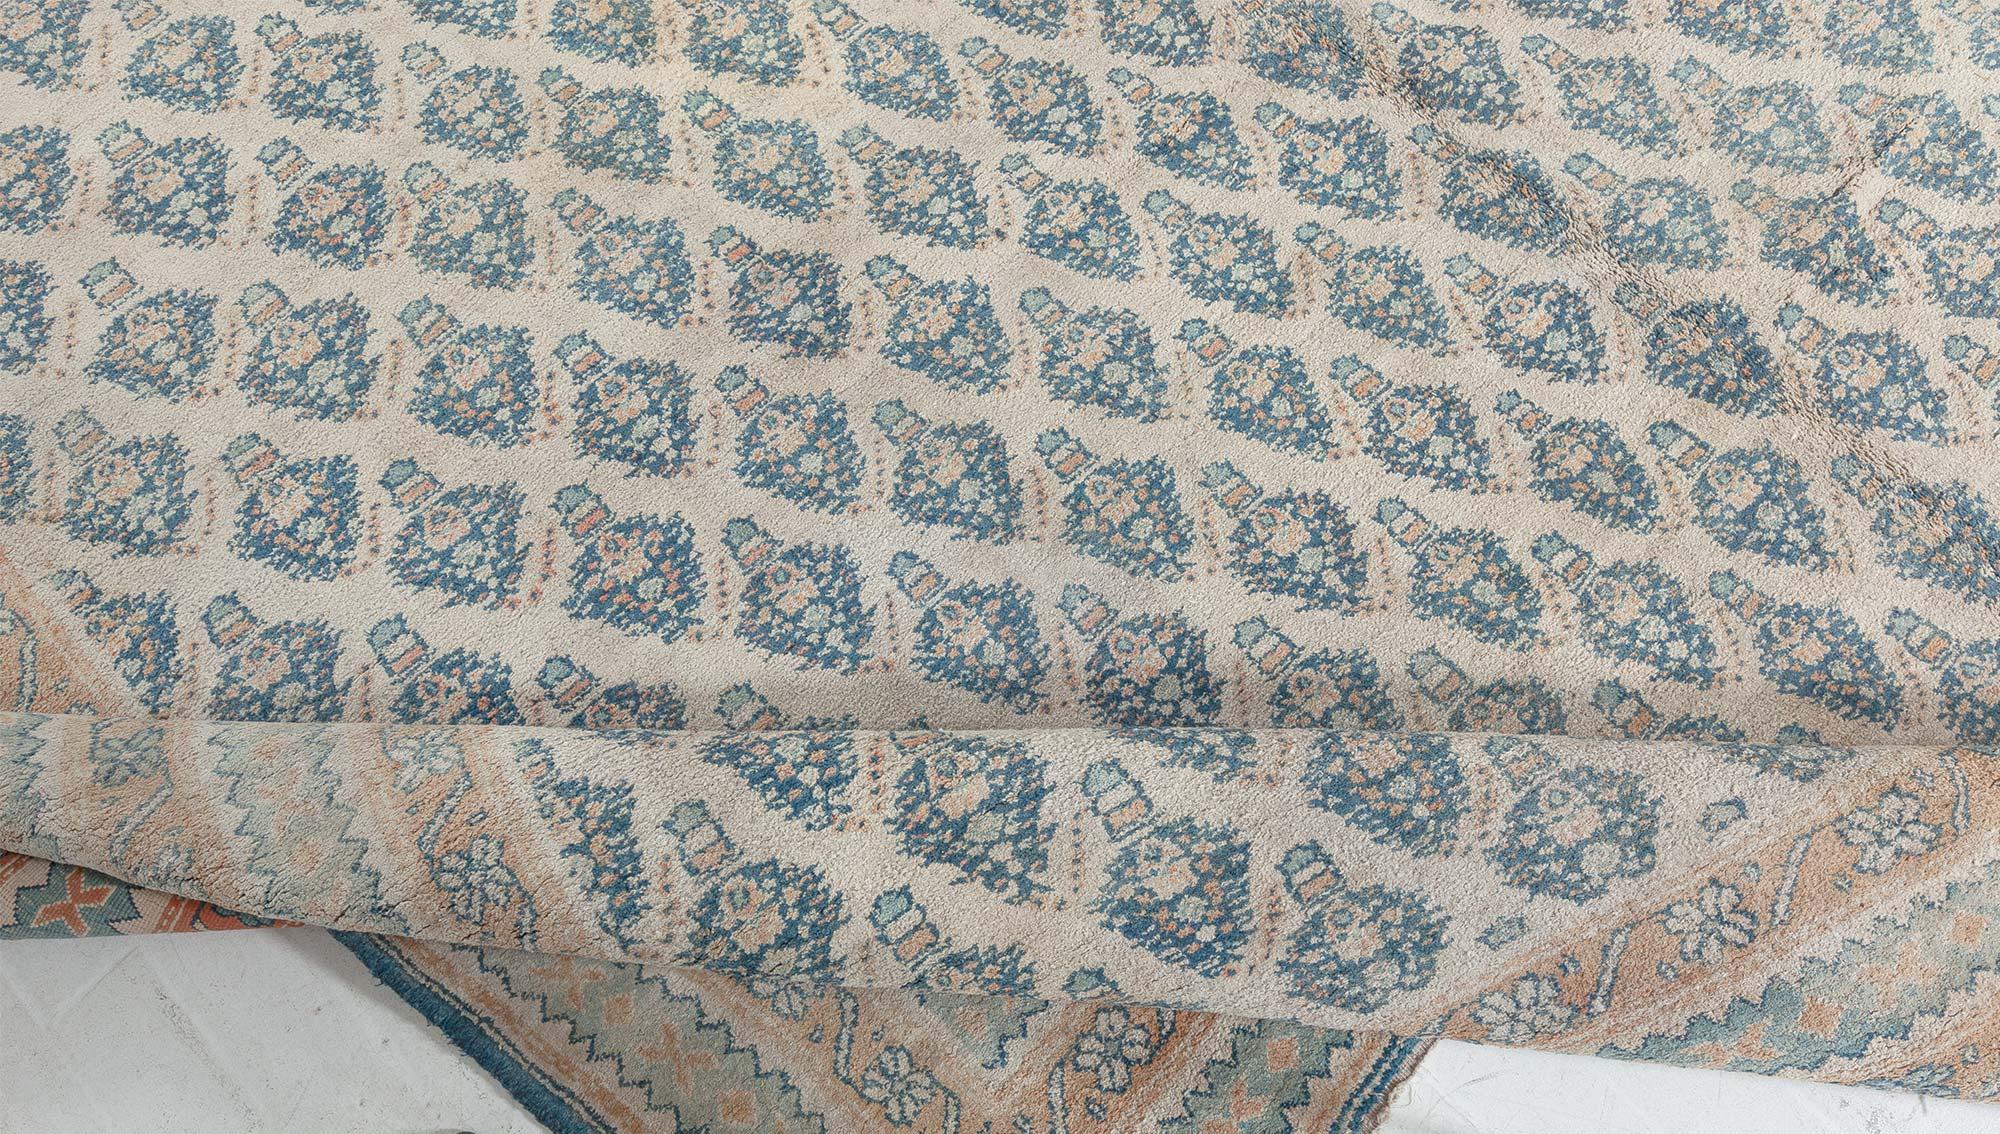 Large antique Indian Agra beige background rug
Size: 14'10